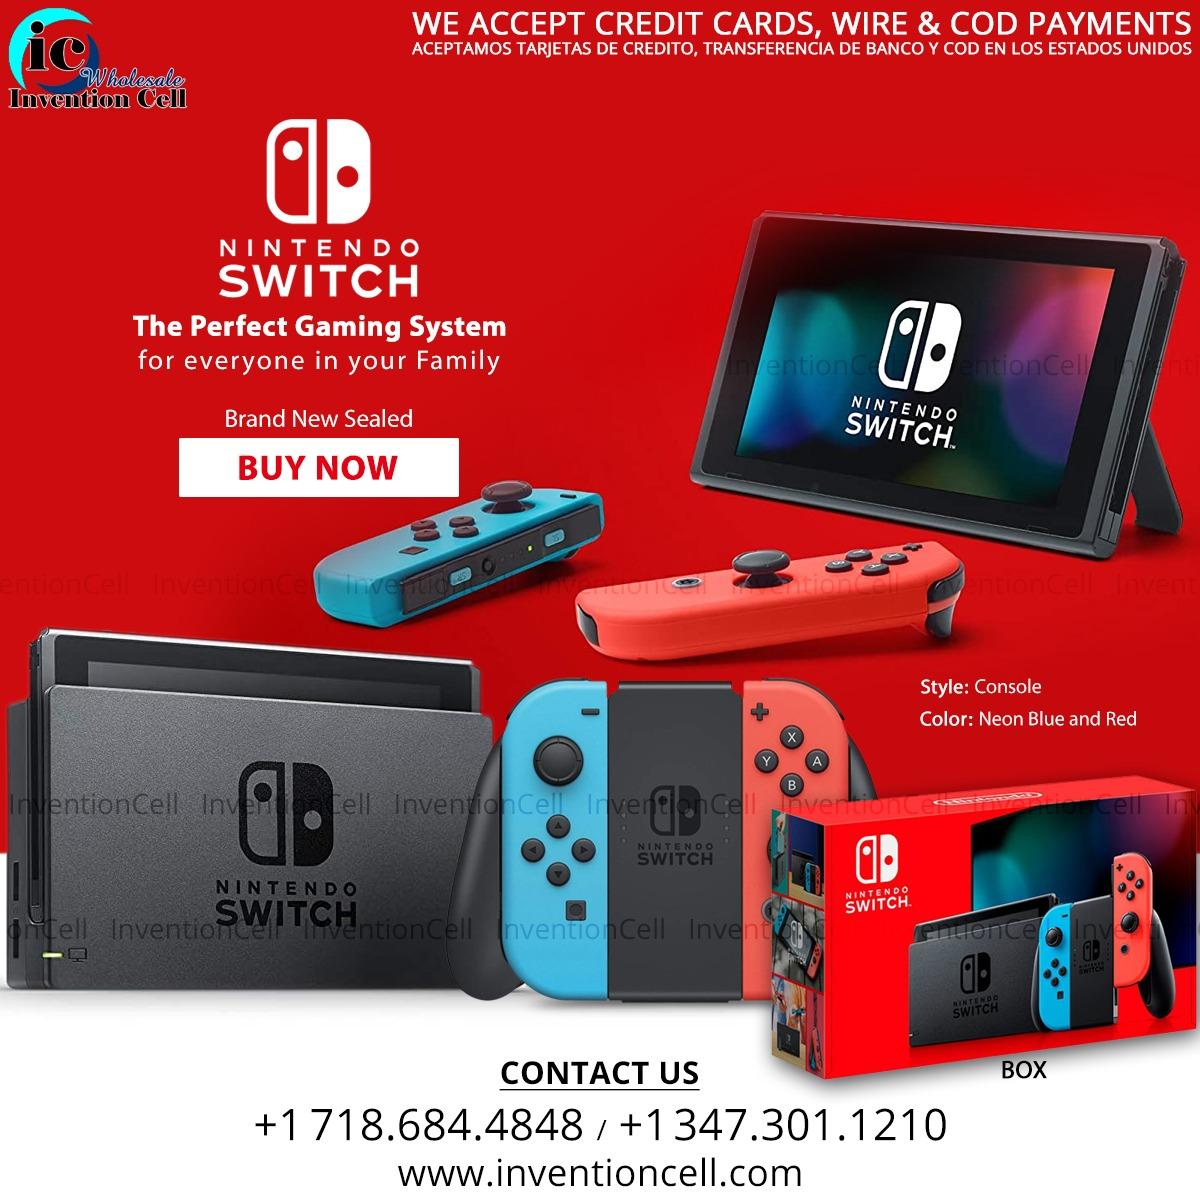 Nintendo Nintendo Switch Wholesale